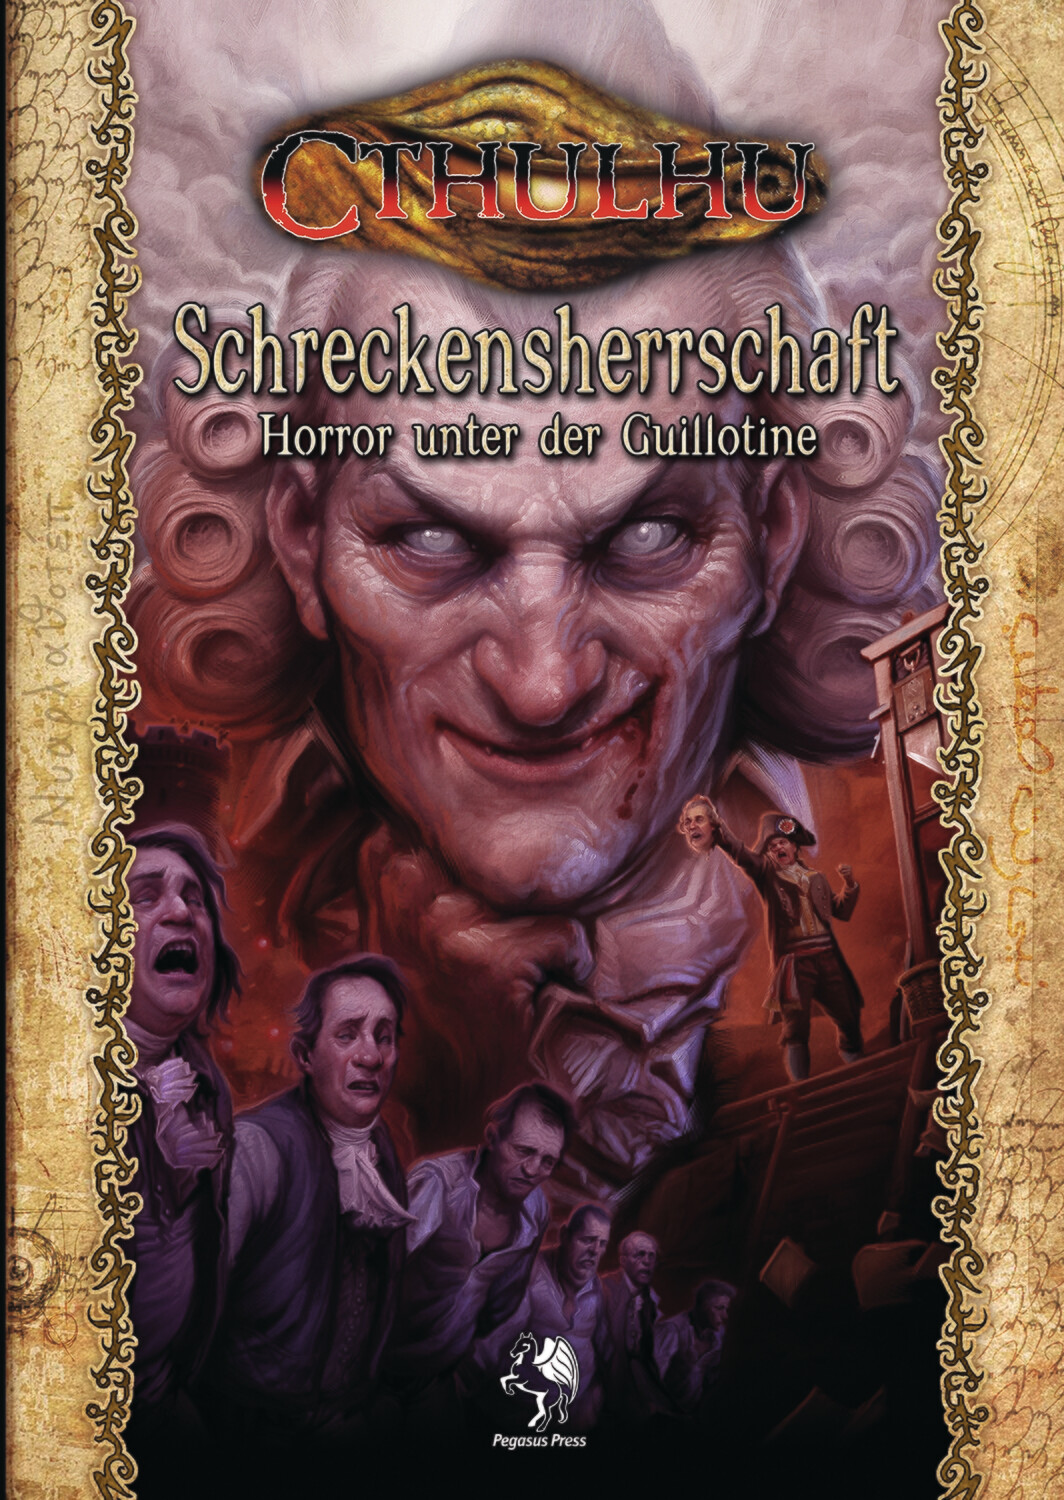 Cthulhu: Schreckensherrschaft (Hardcover) - Rollenspiel